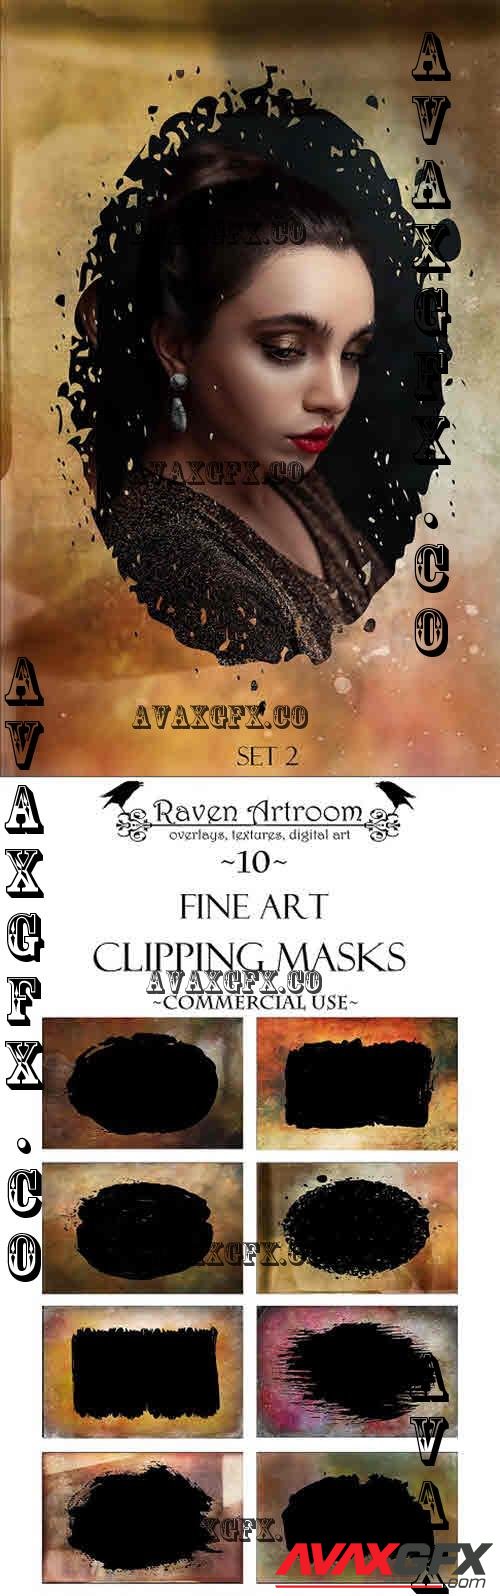 Fine Art Clipping Masks, Clipart, Digital Frames, Overlays - 2264290